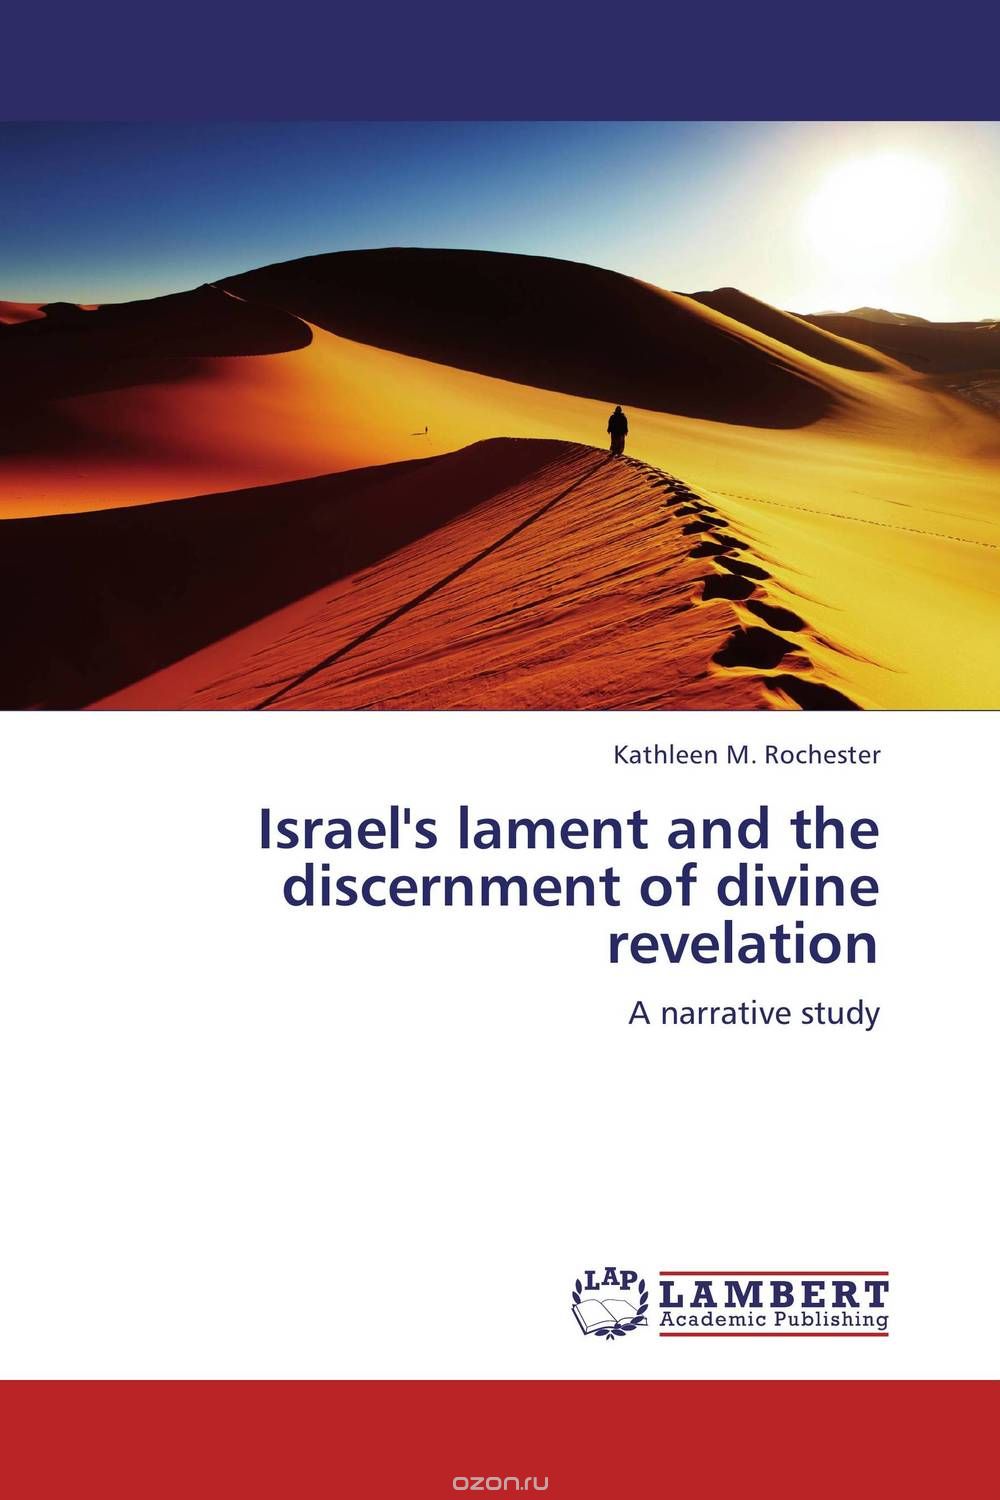 Скачать книгу "Israel's lament and the discernment of divine revelation"